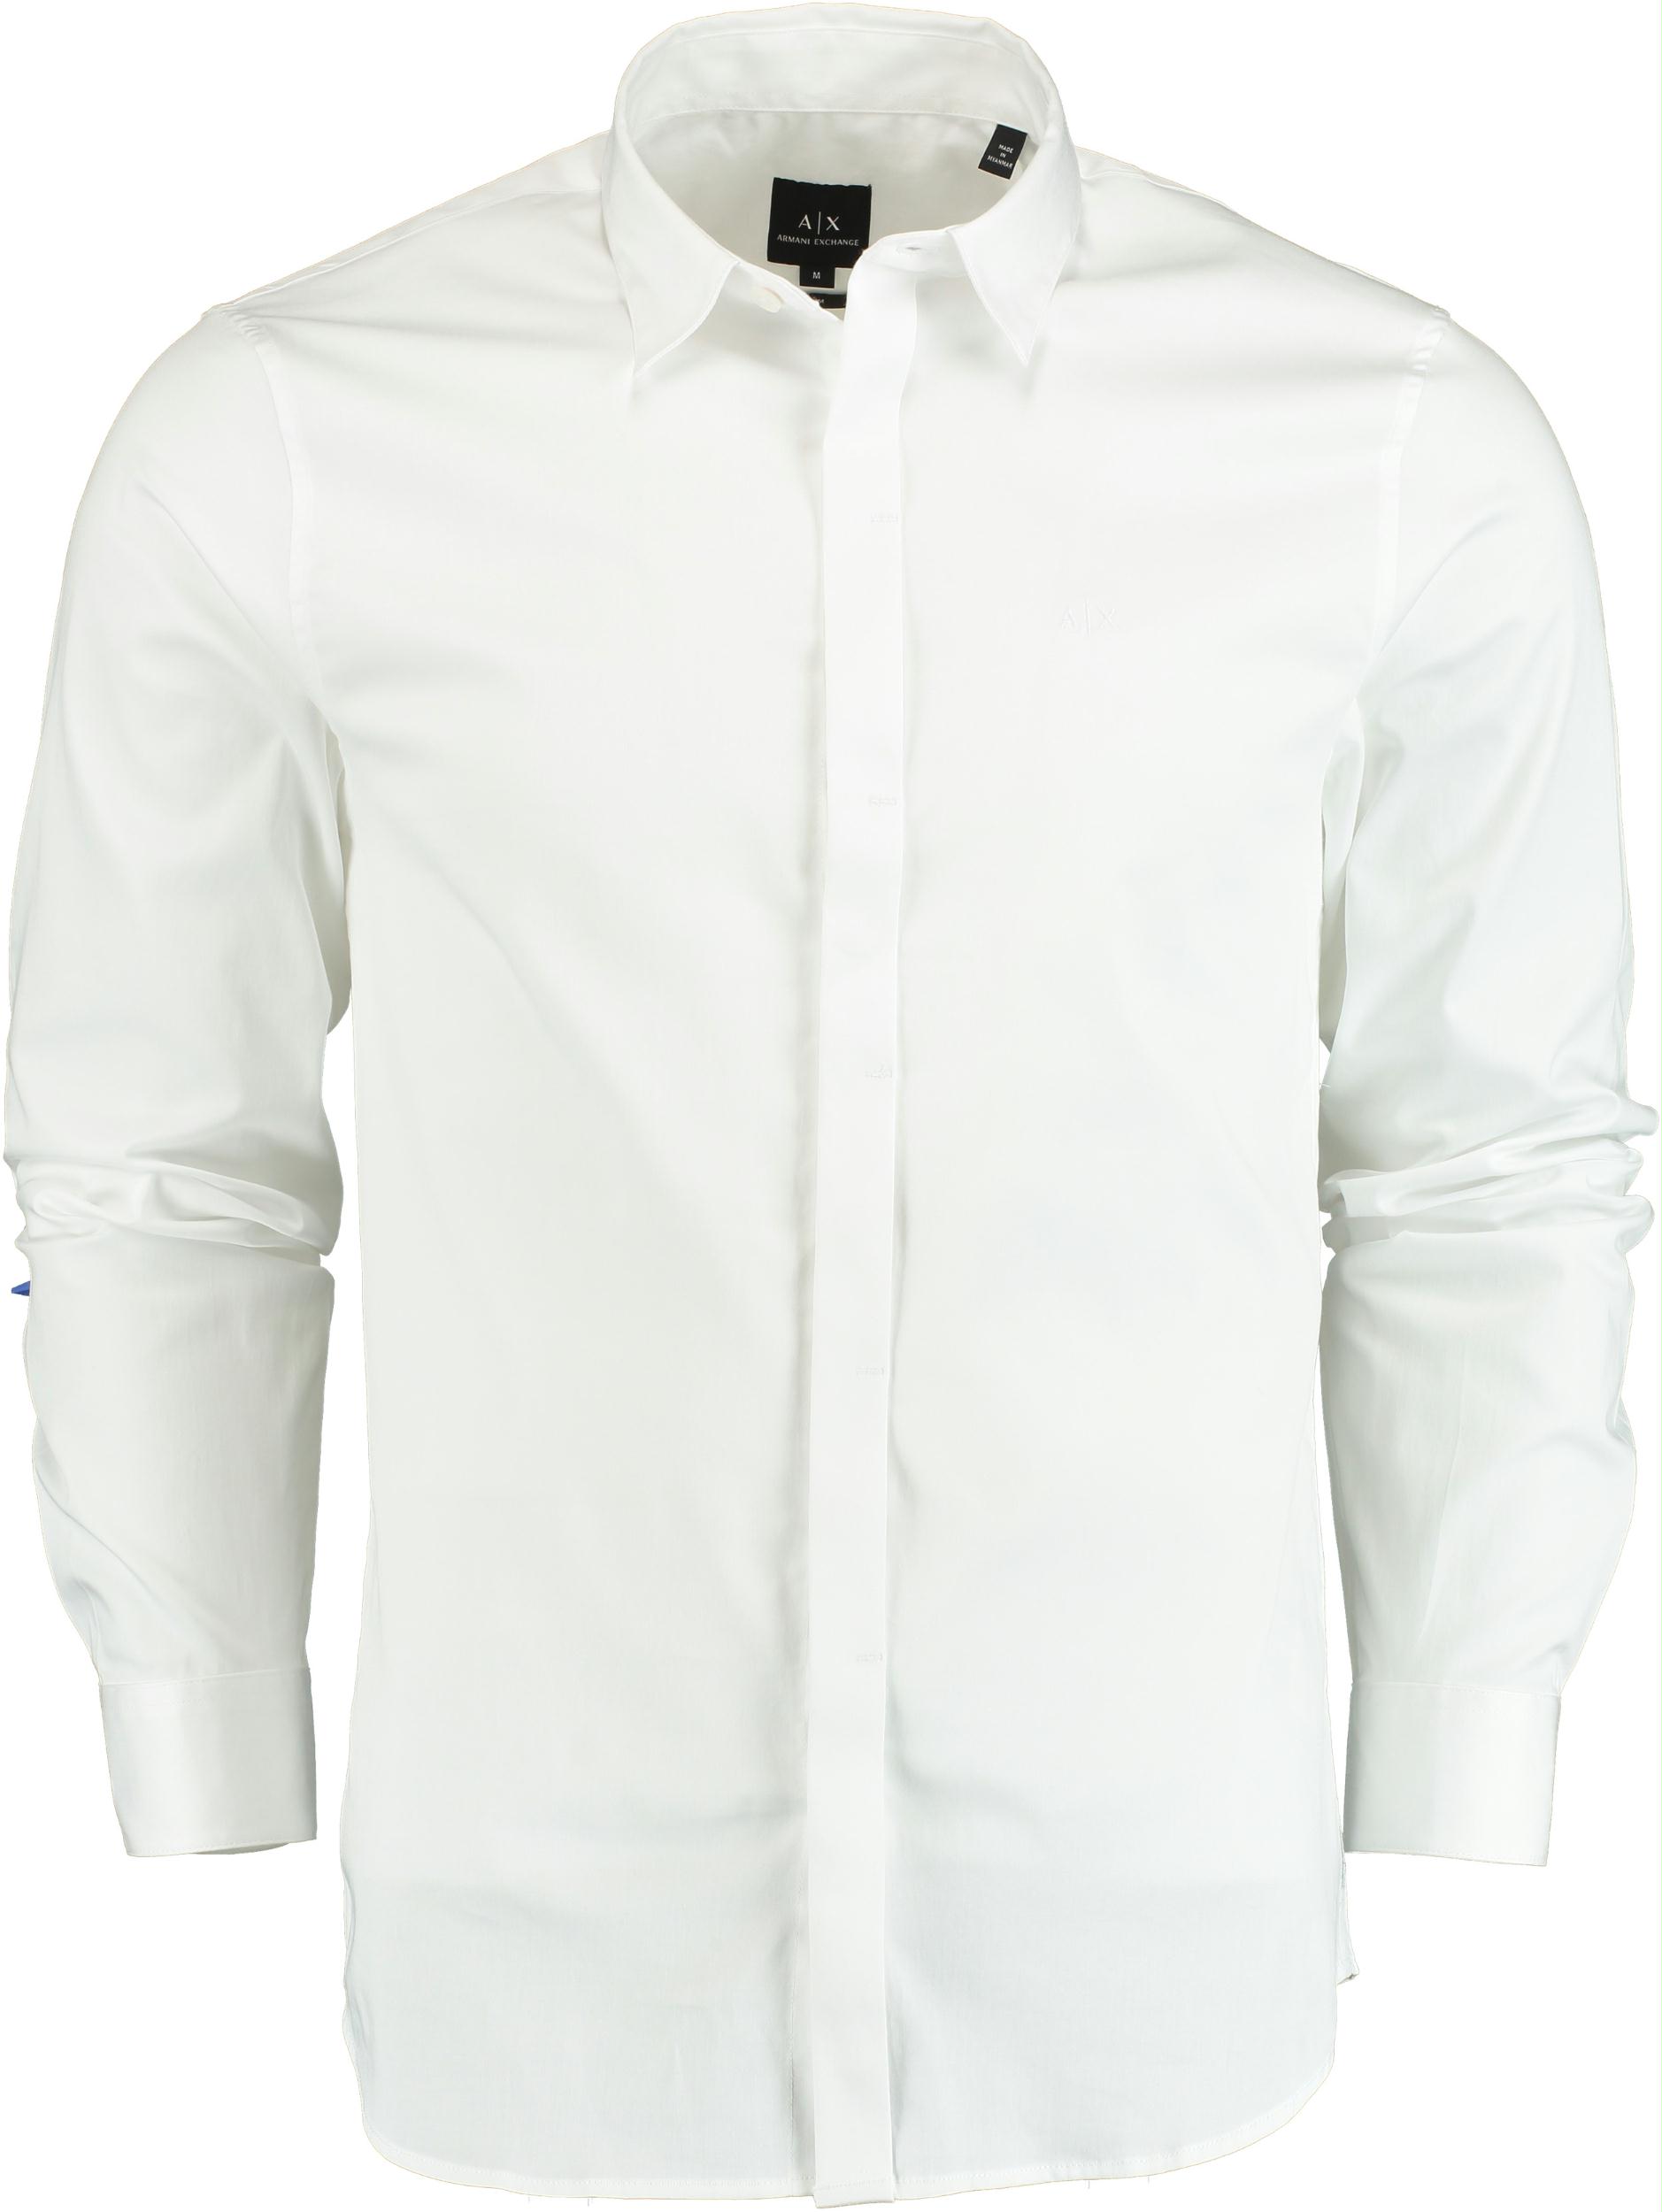 Afbeelding van Armani Exchange Casual hemd lange mouw overhemd stretch slim fit 8nzcbd.zn10z/0113